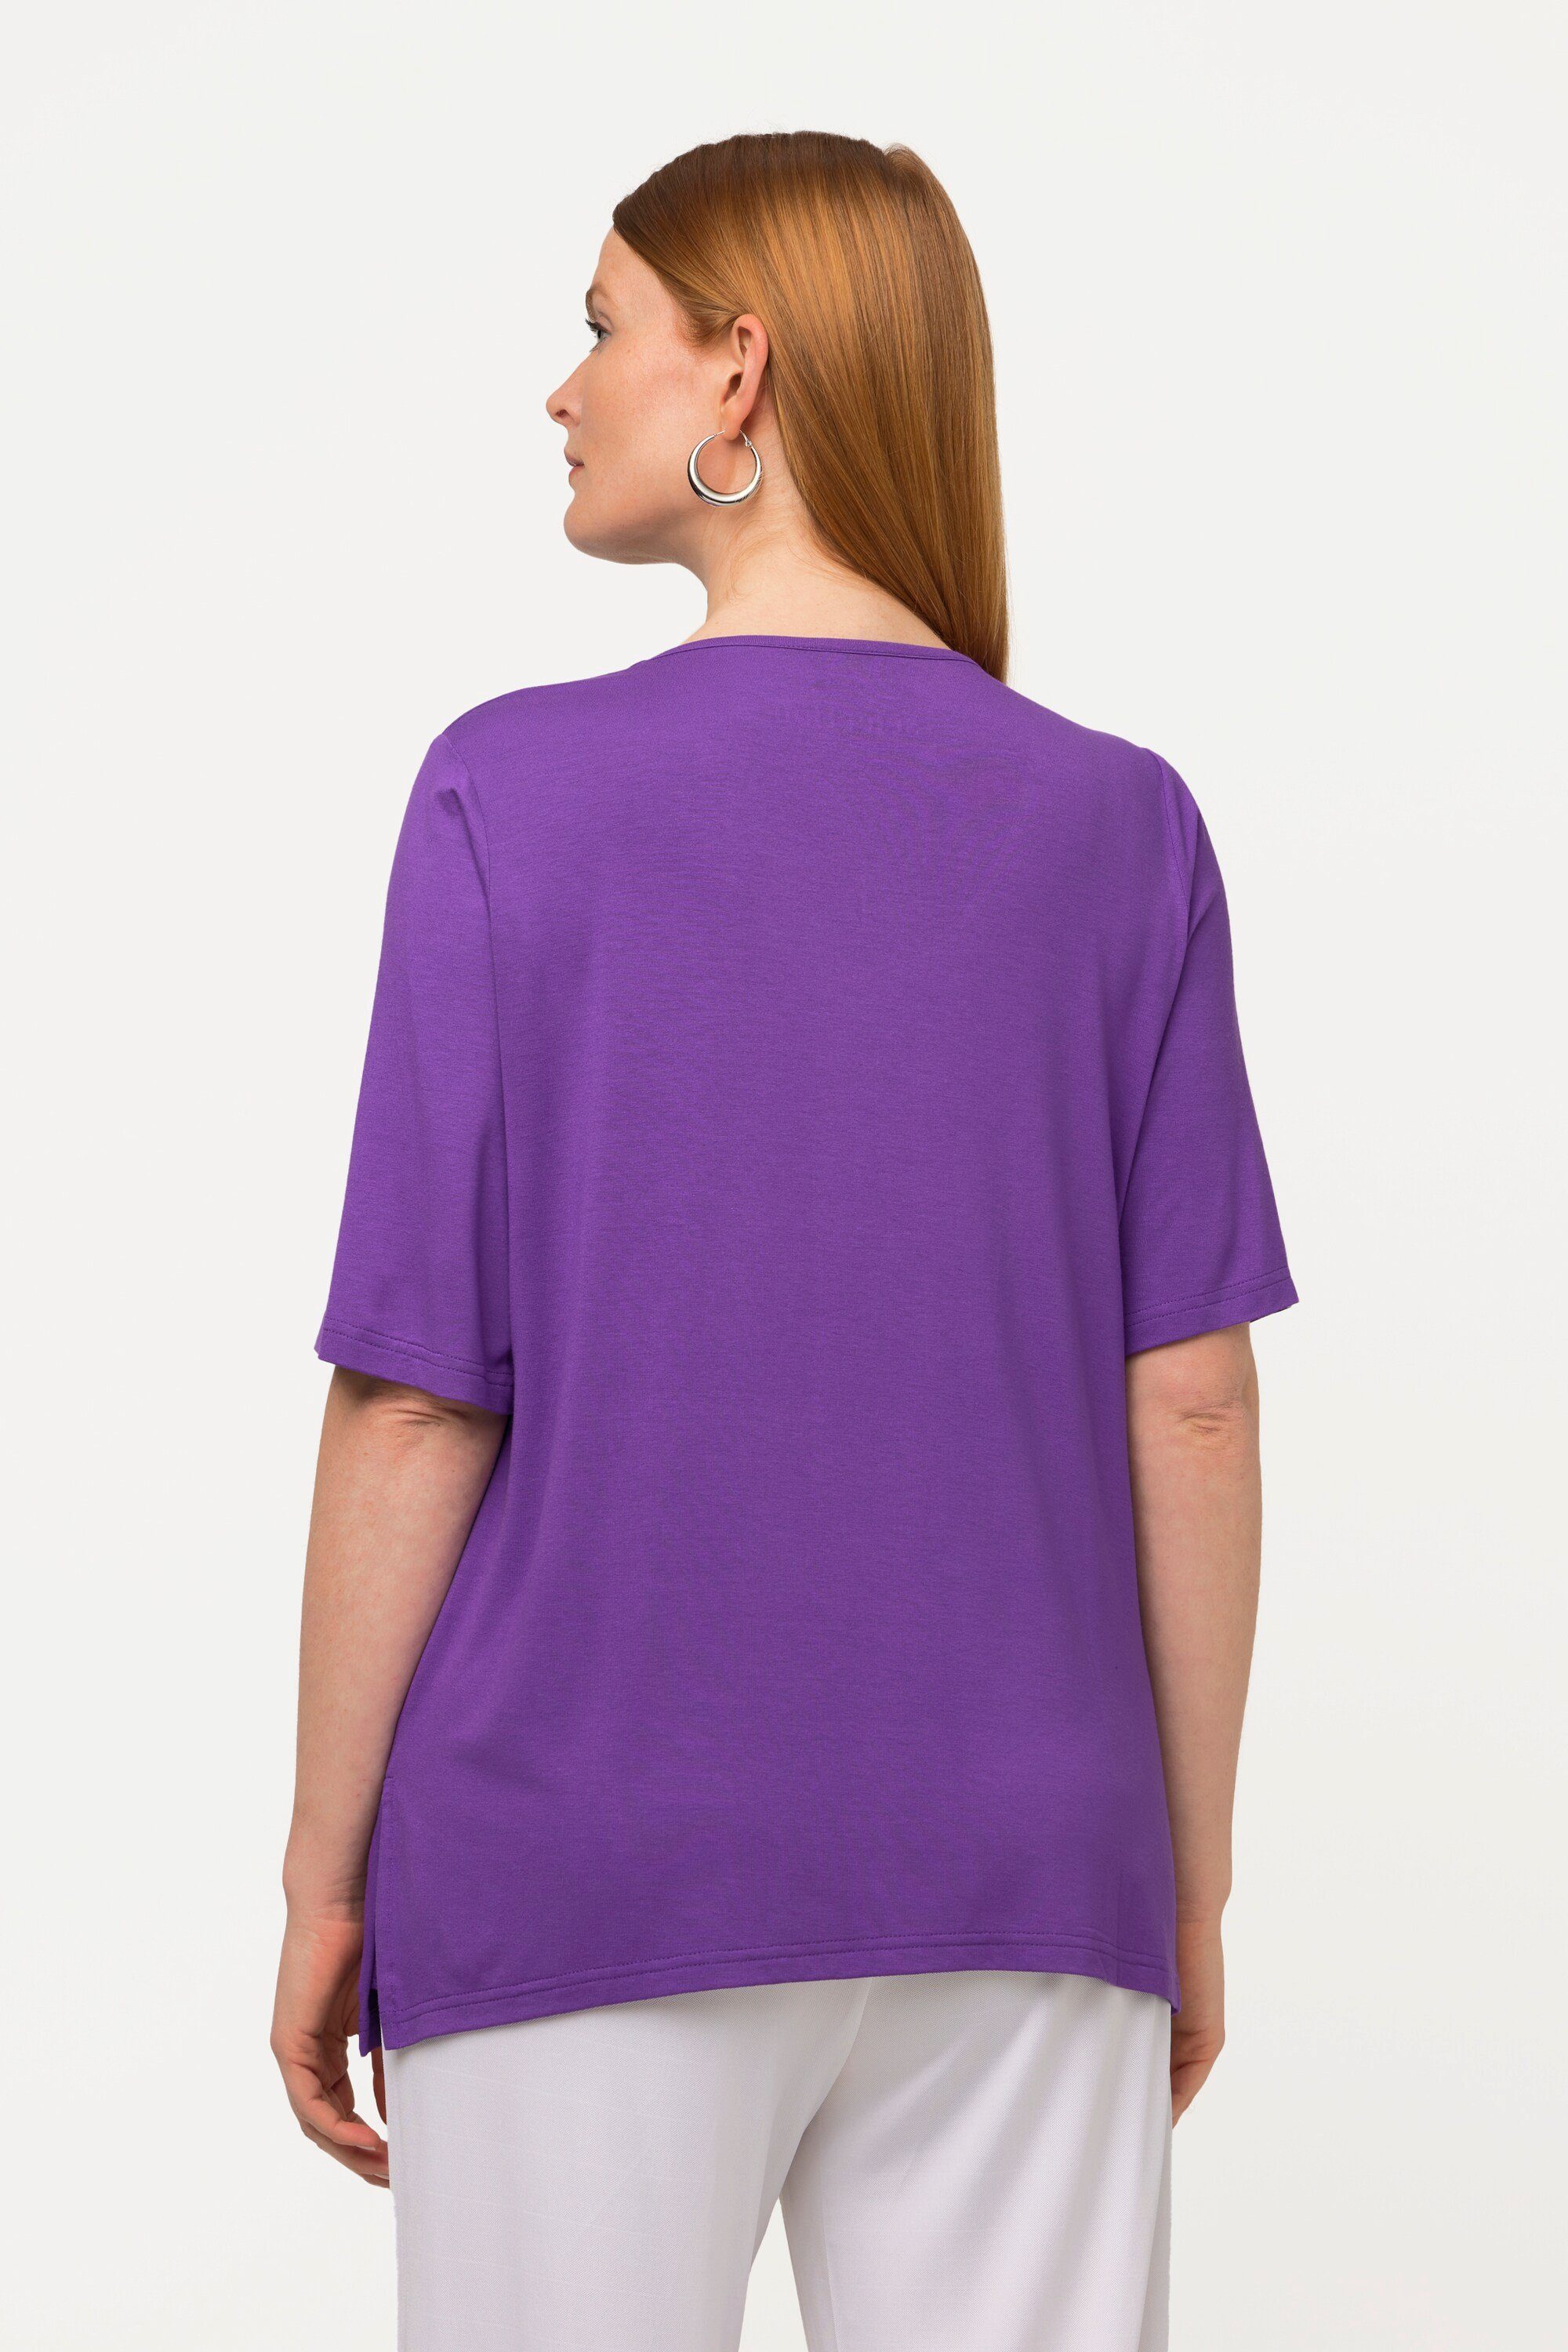 Rundhalsshirt doppellagig Halbarm violett V-Ausschnitt Popken T-Shirt vorne Ulla